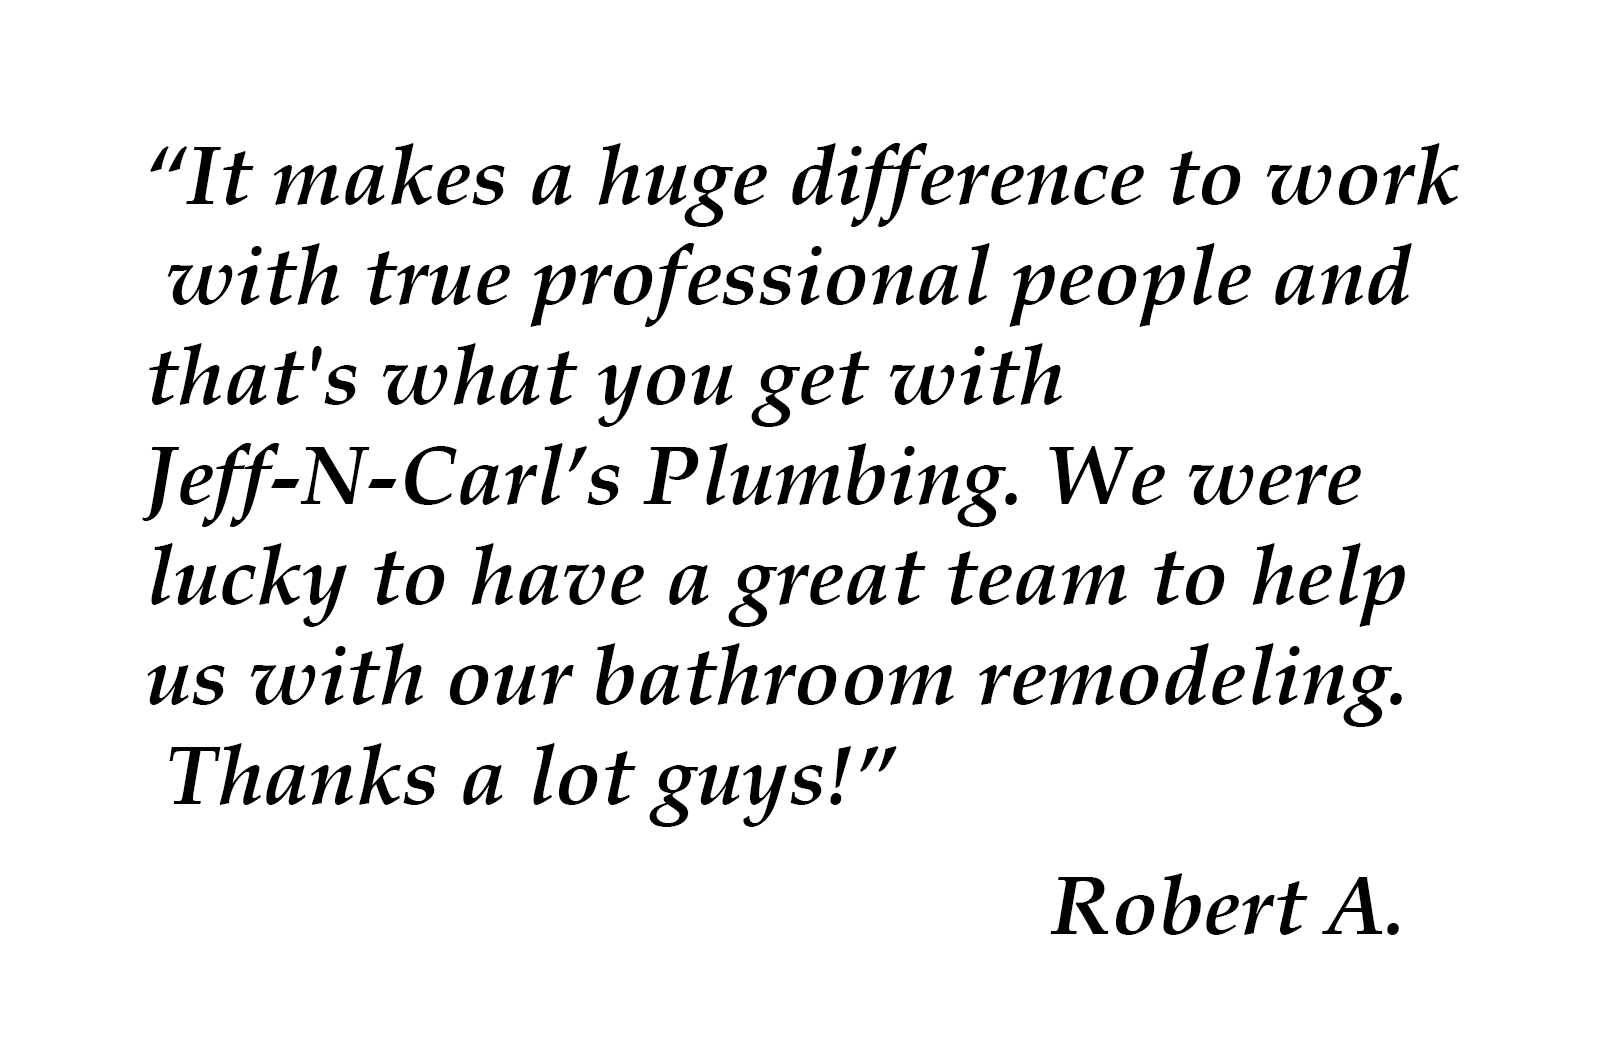 Jeff-N-Carl's Plumbing